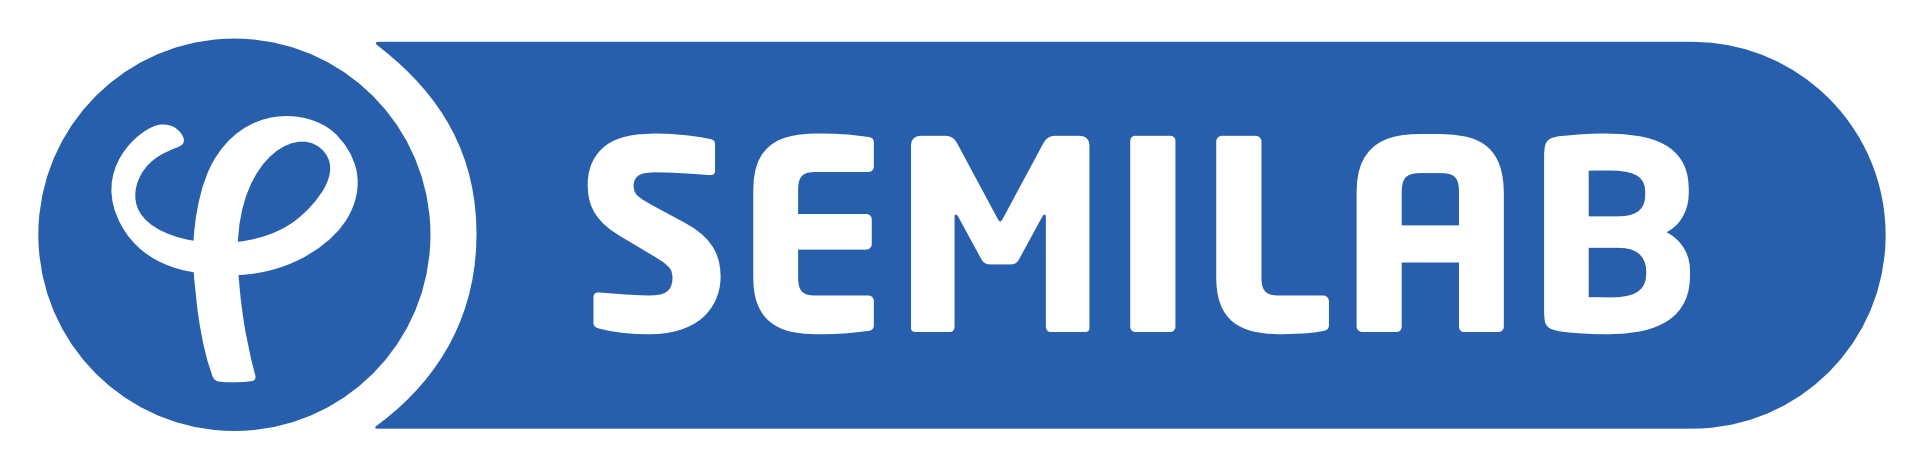 semilab logo rgb transparent background